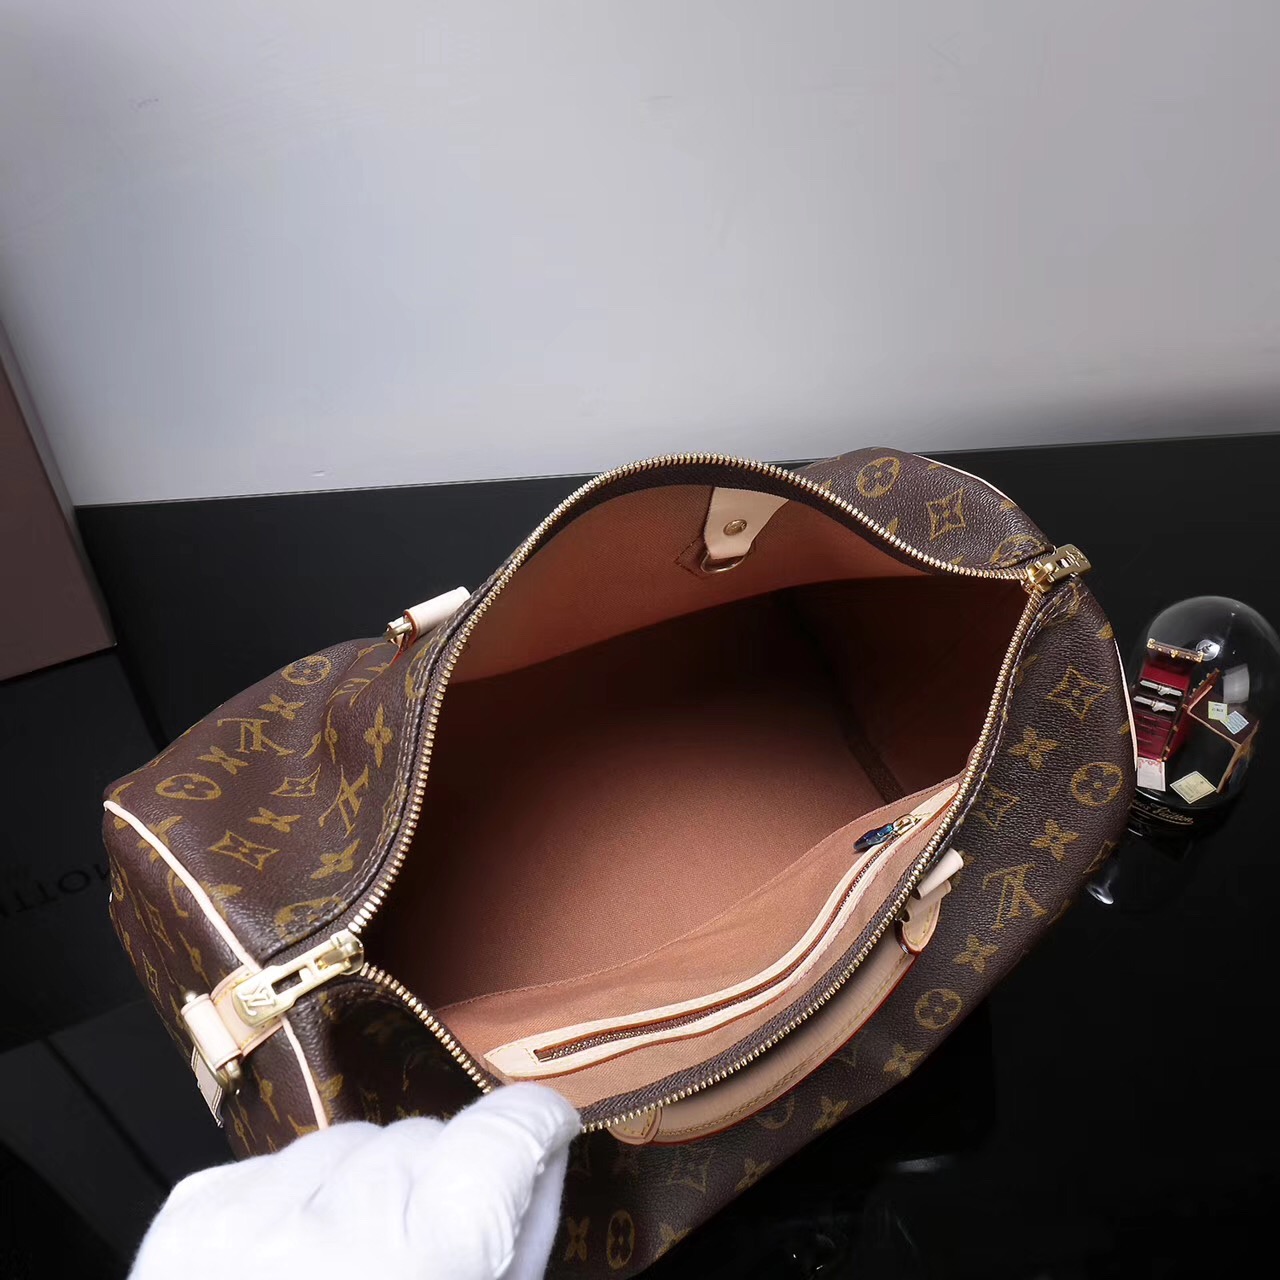 Luxury Bag Review/ Haul: Louis Vuitton Speedy 35 Epi